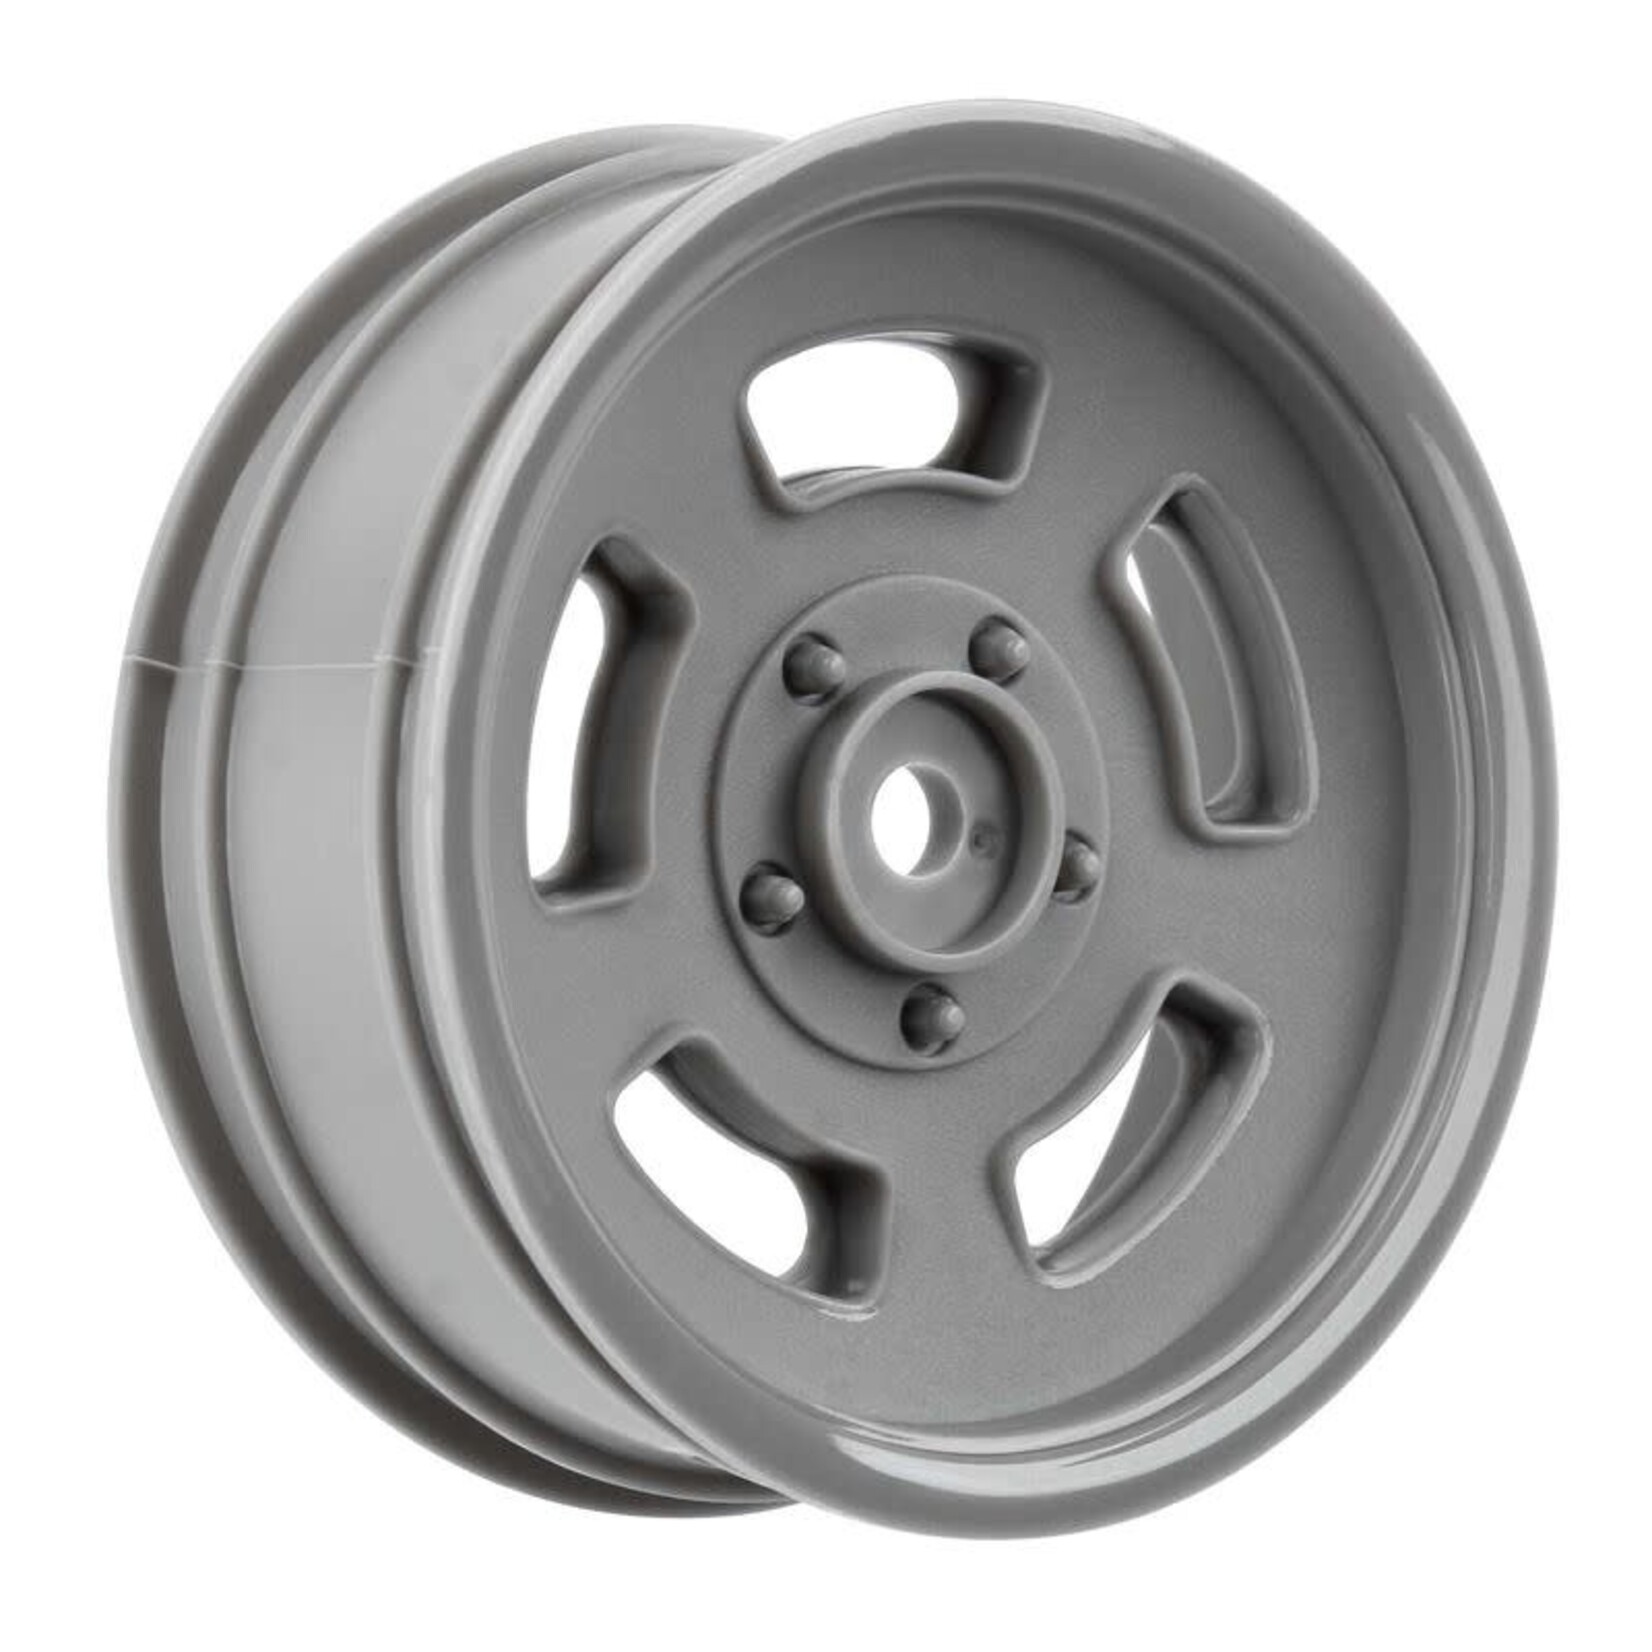 Pro-Line Racing 2.2 Retro Drag Spec Wheels Stone Gray (2)